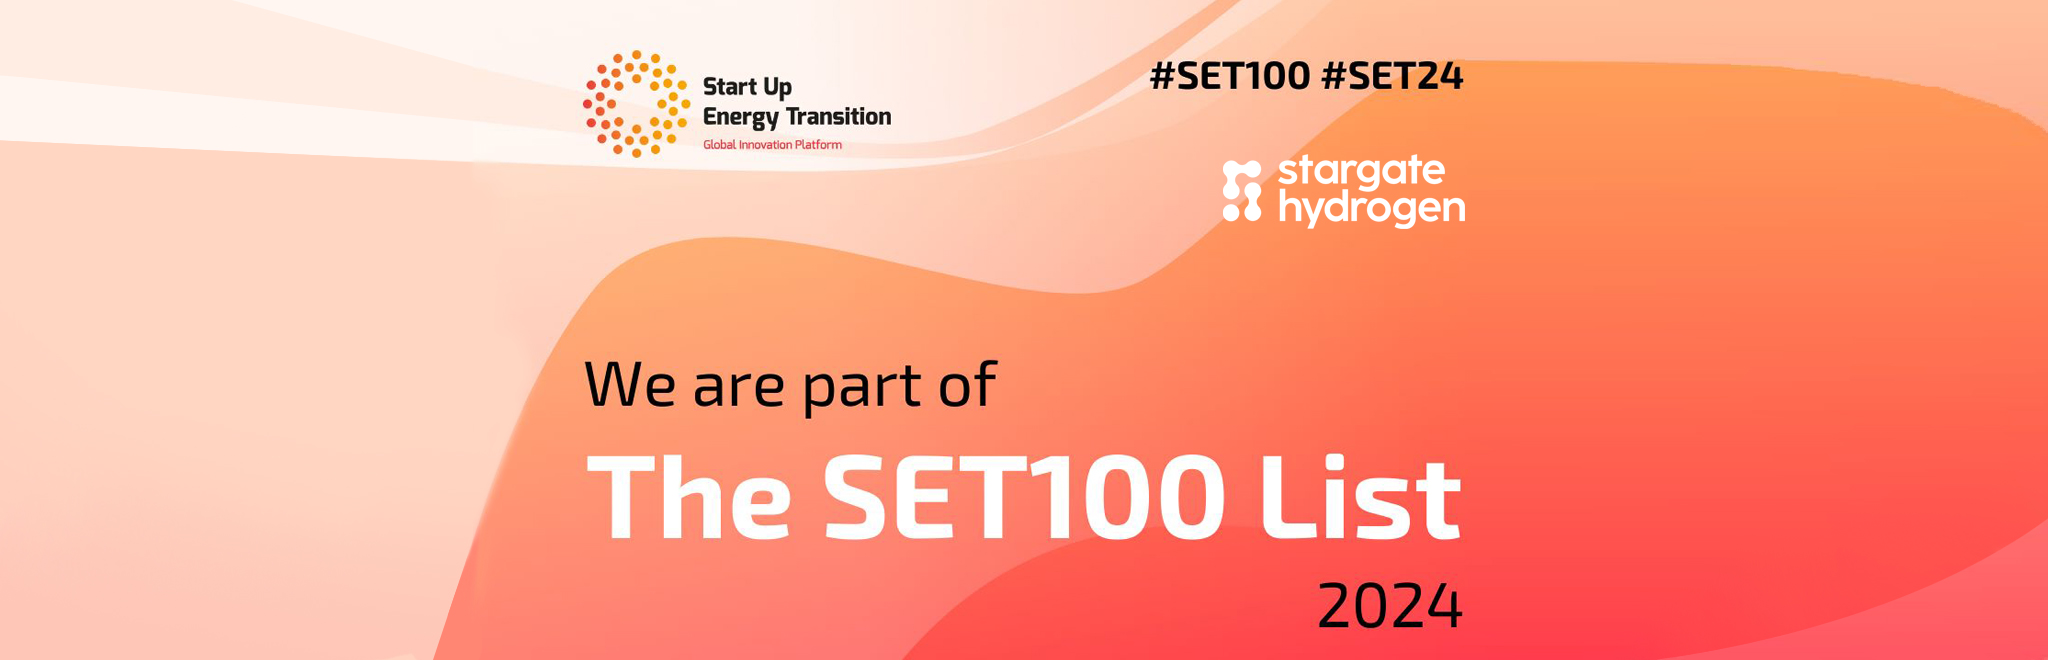 Set 100 list - Energy Transitions